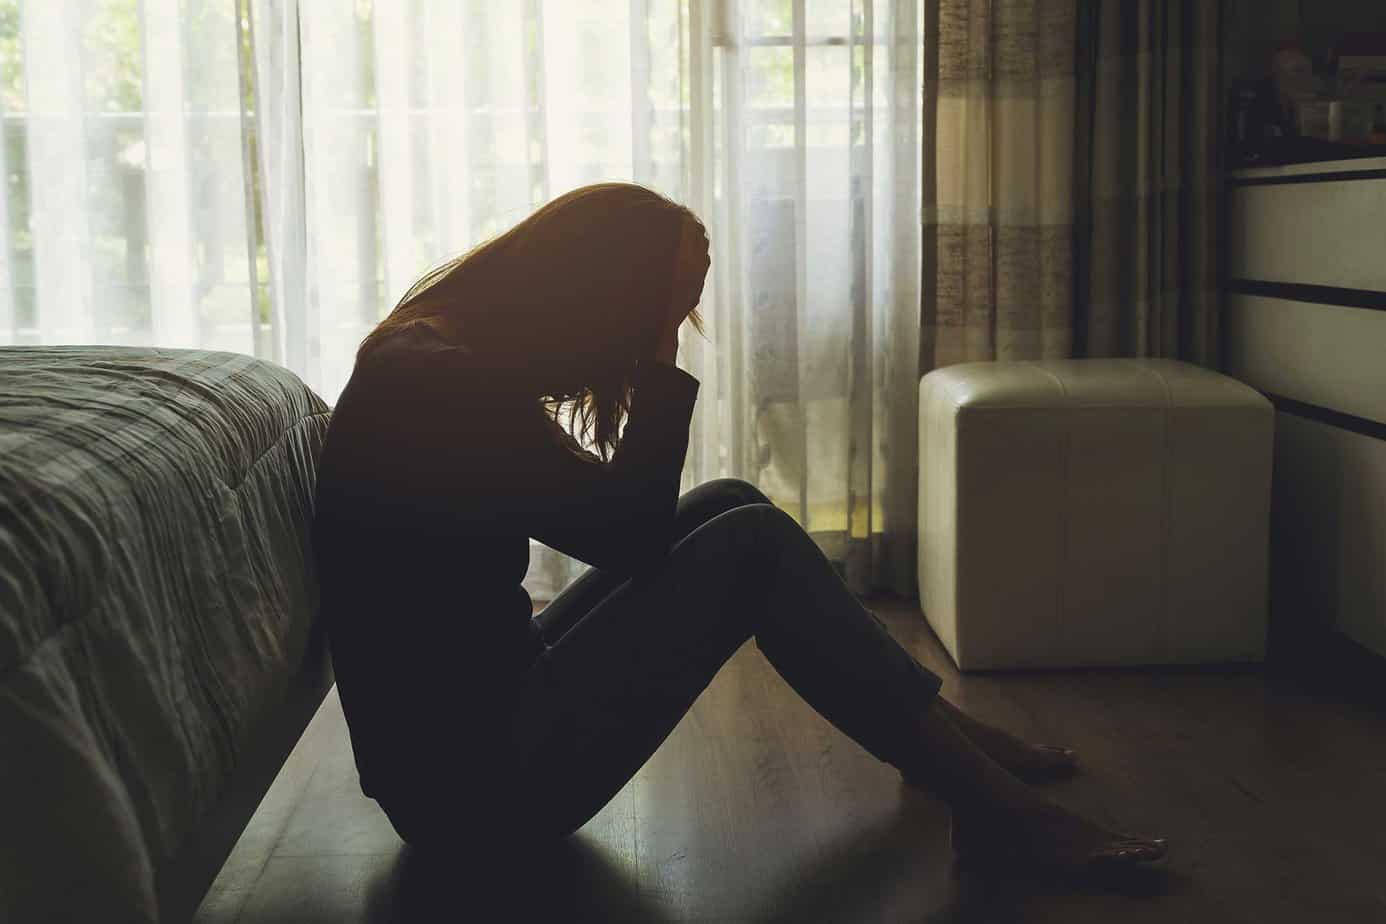 depressed silhouette of woman sitting on ground in dark room